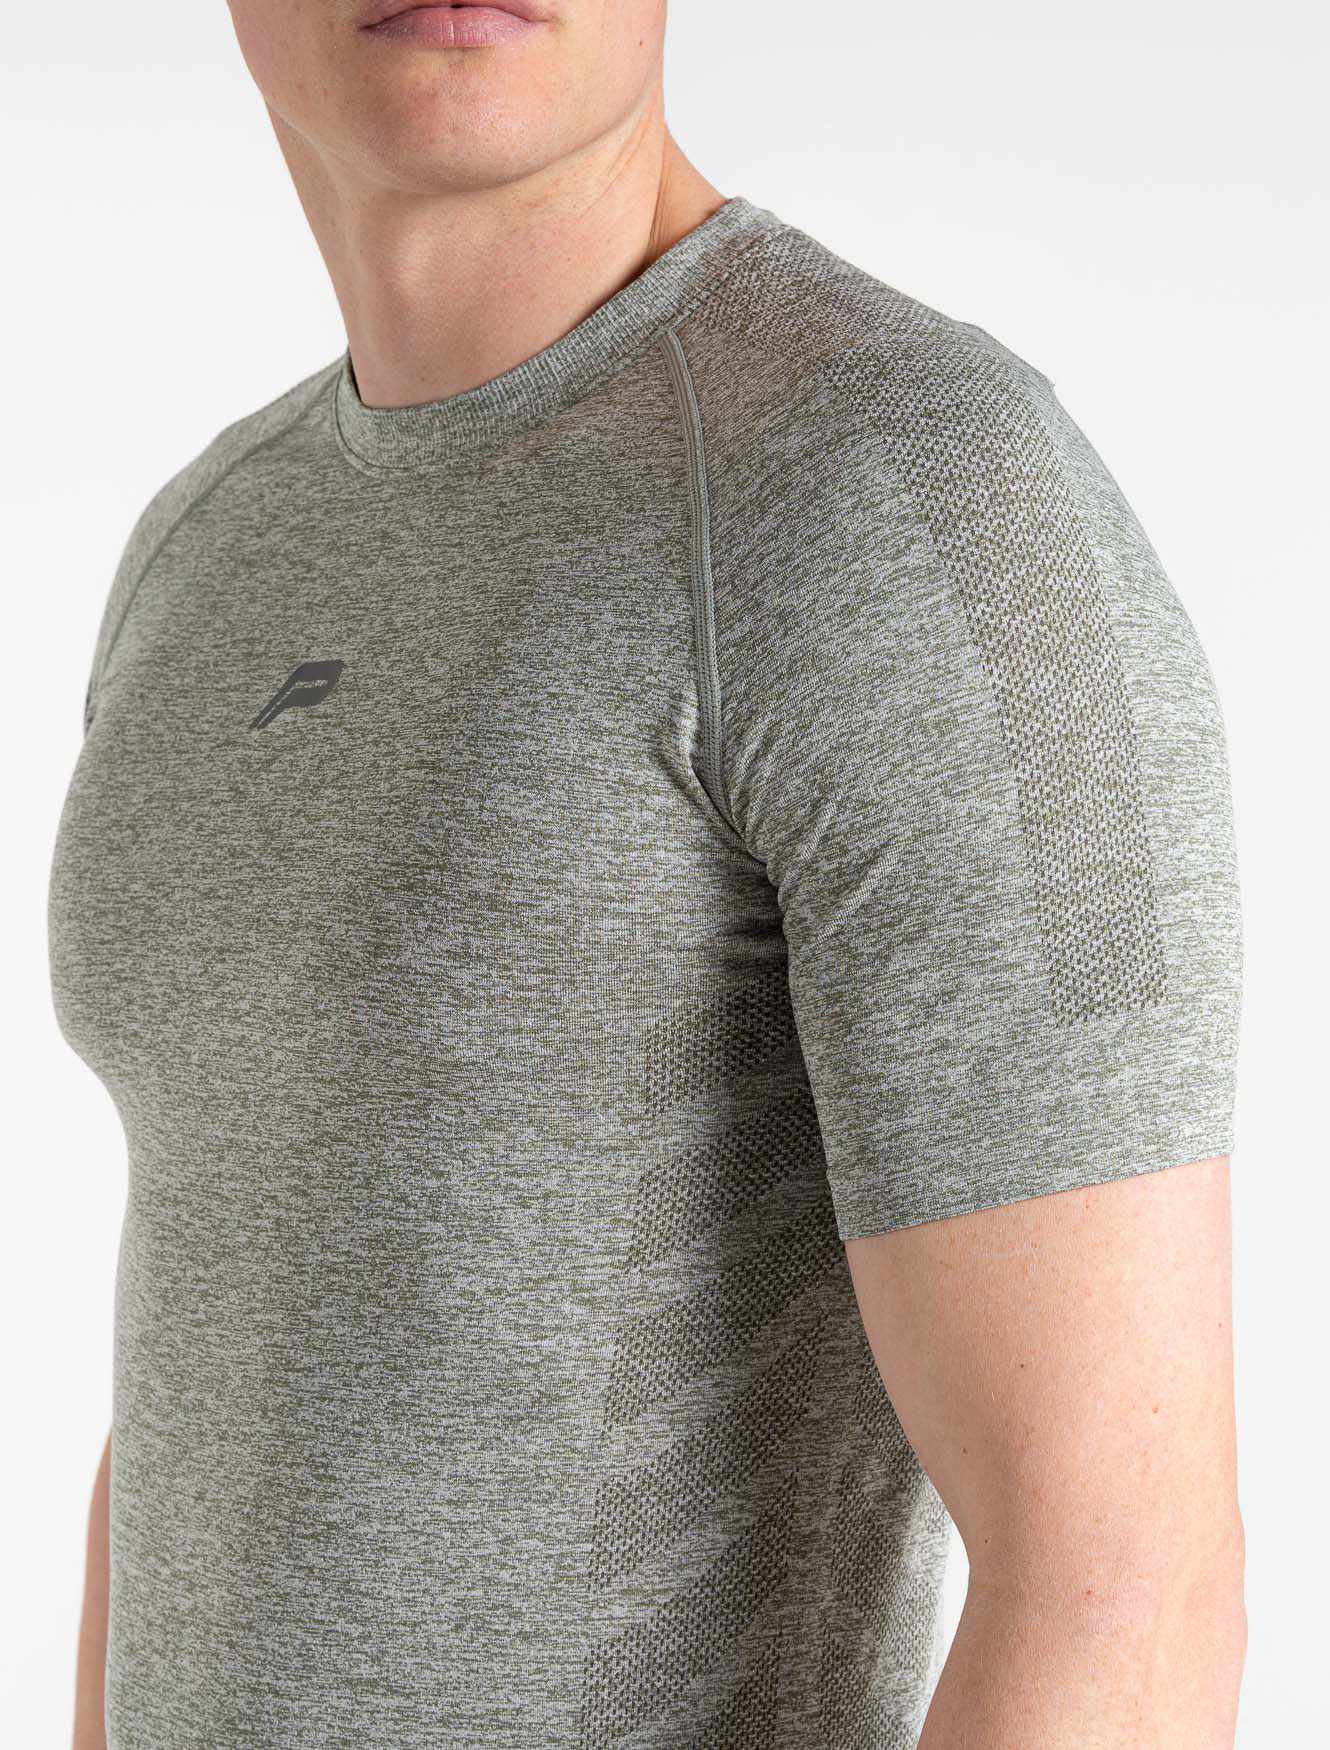 Intensity Seamless T-shirt / Khaki Marl Pursue Fitness 4